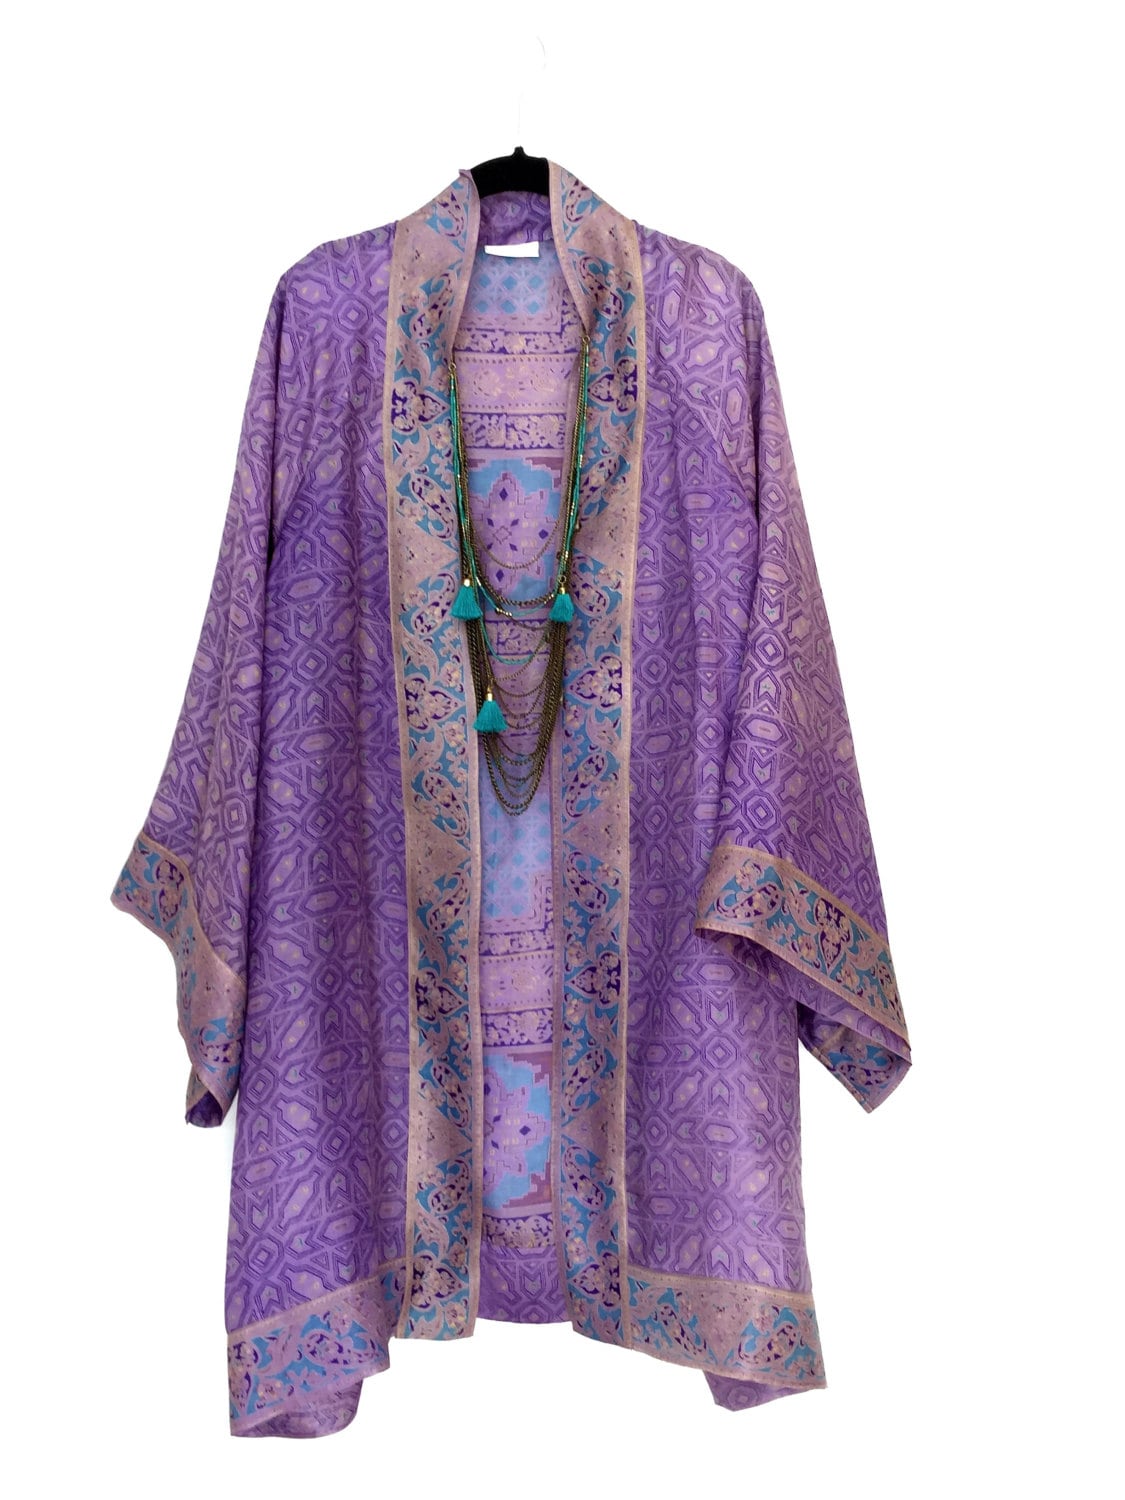 Silk kimono jacket / beach cover up / in a lilac purple